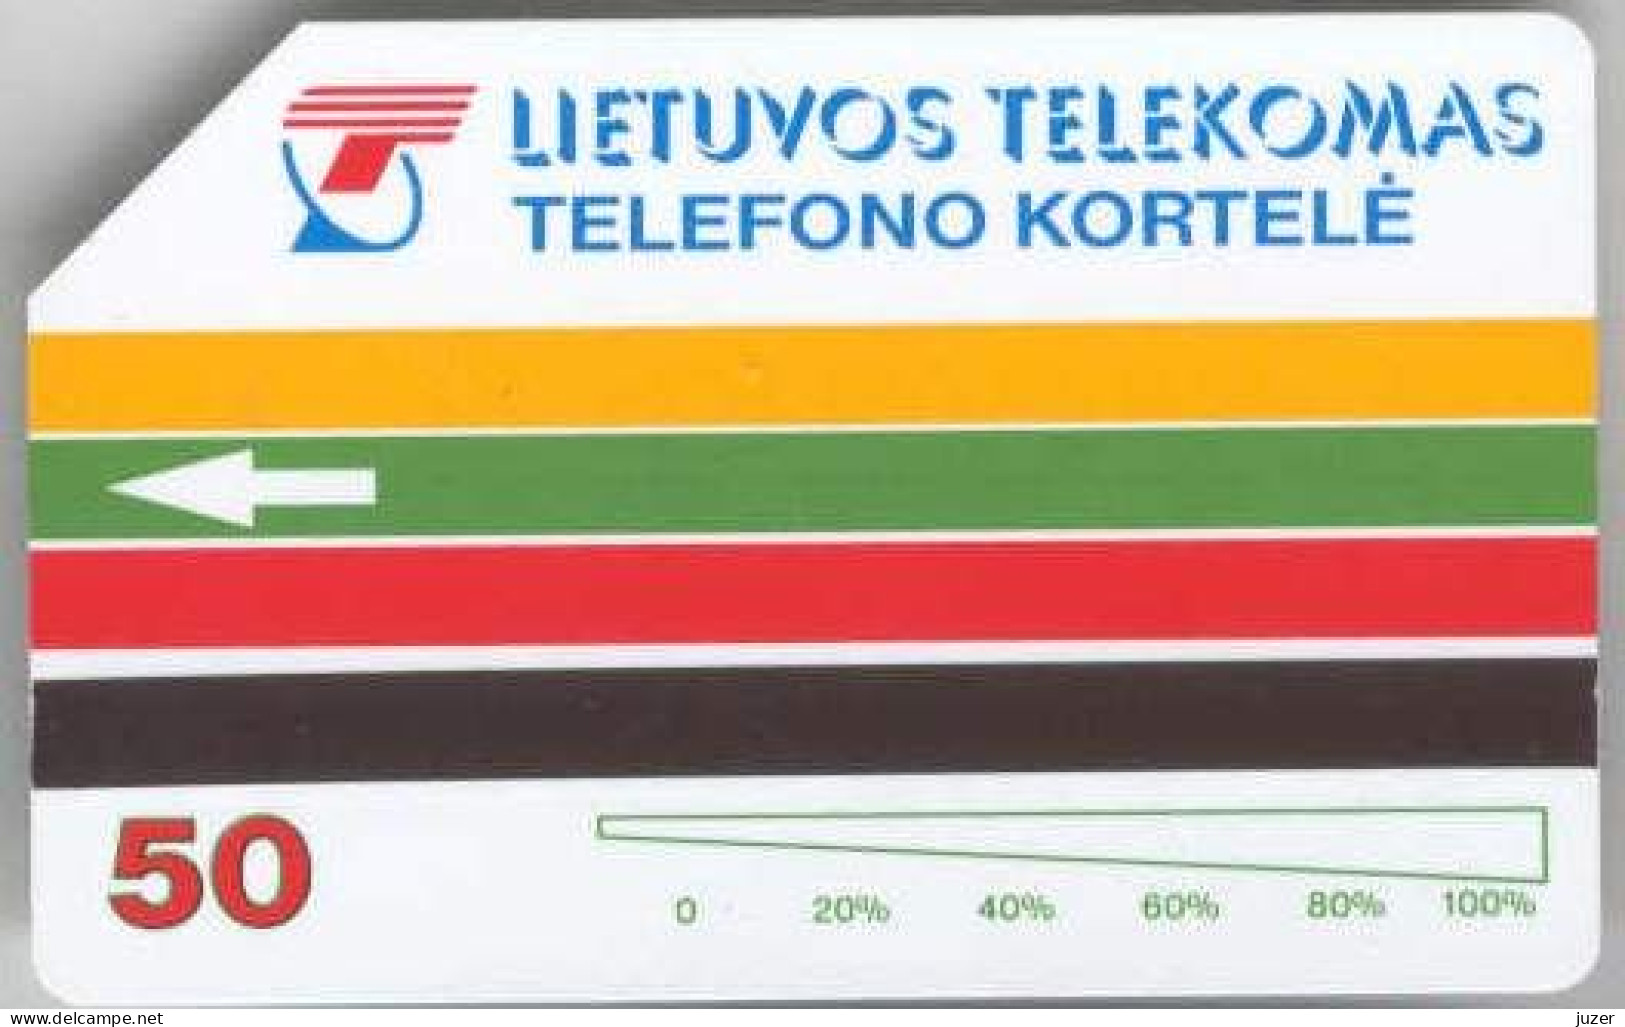 Lithuania. 1997. Ferrero Tic Tac - Lithuania